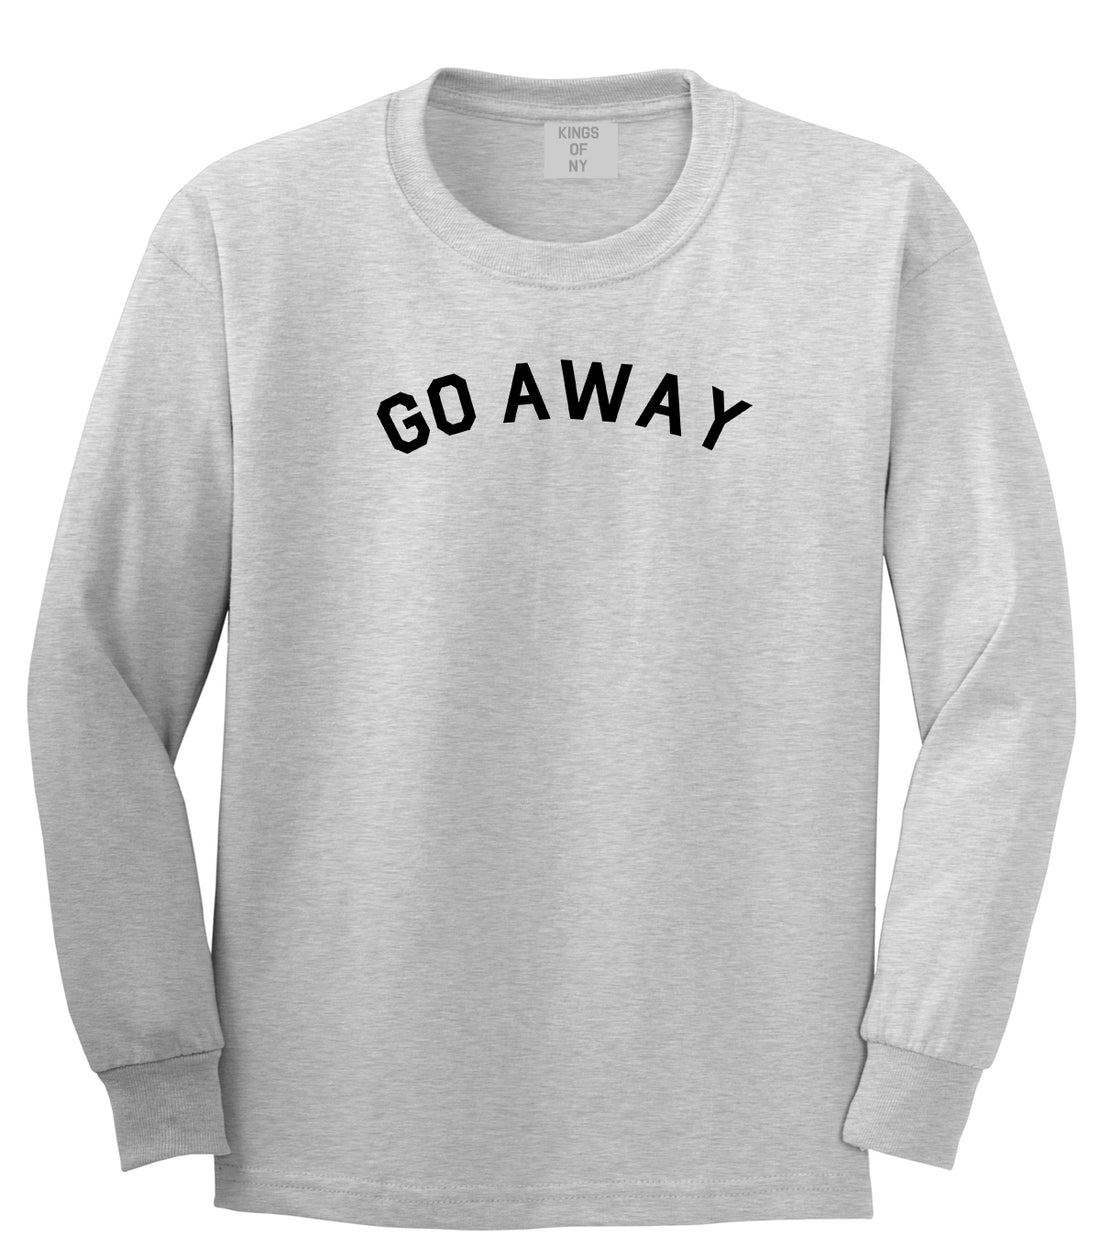 Go Away Mens Grey Long Sleeve T-Shirt by KINGS OF NY